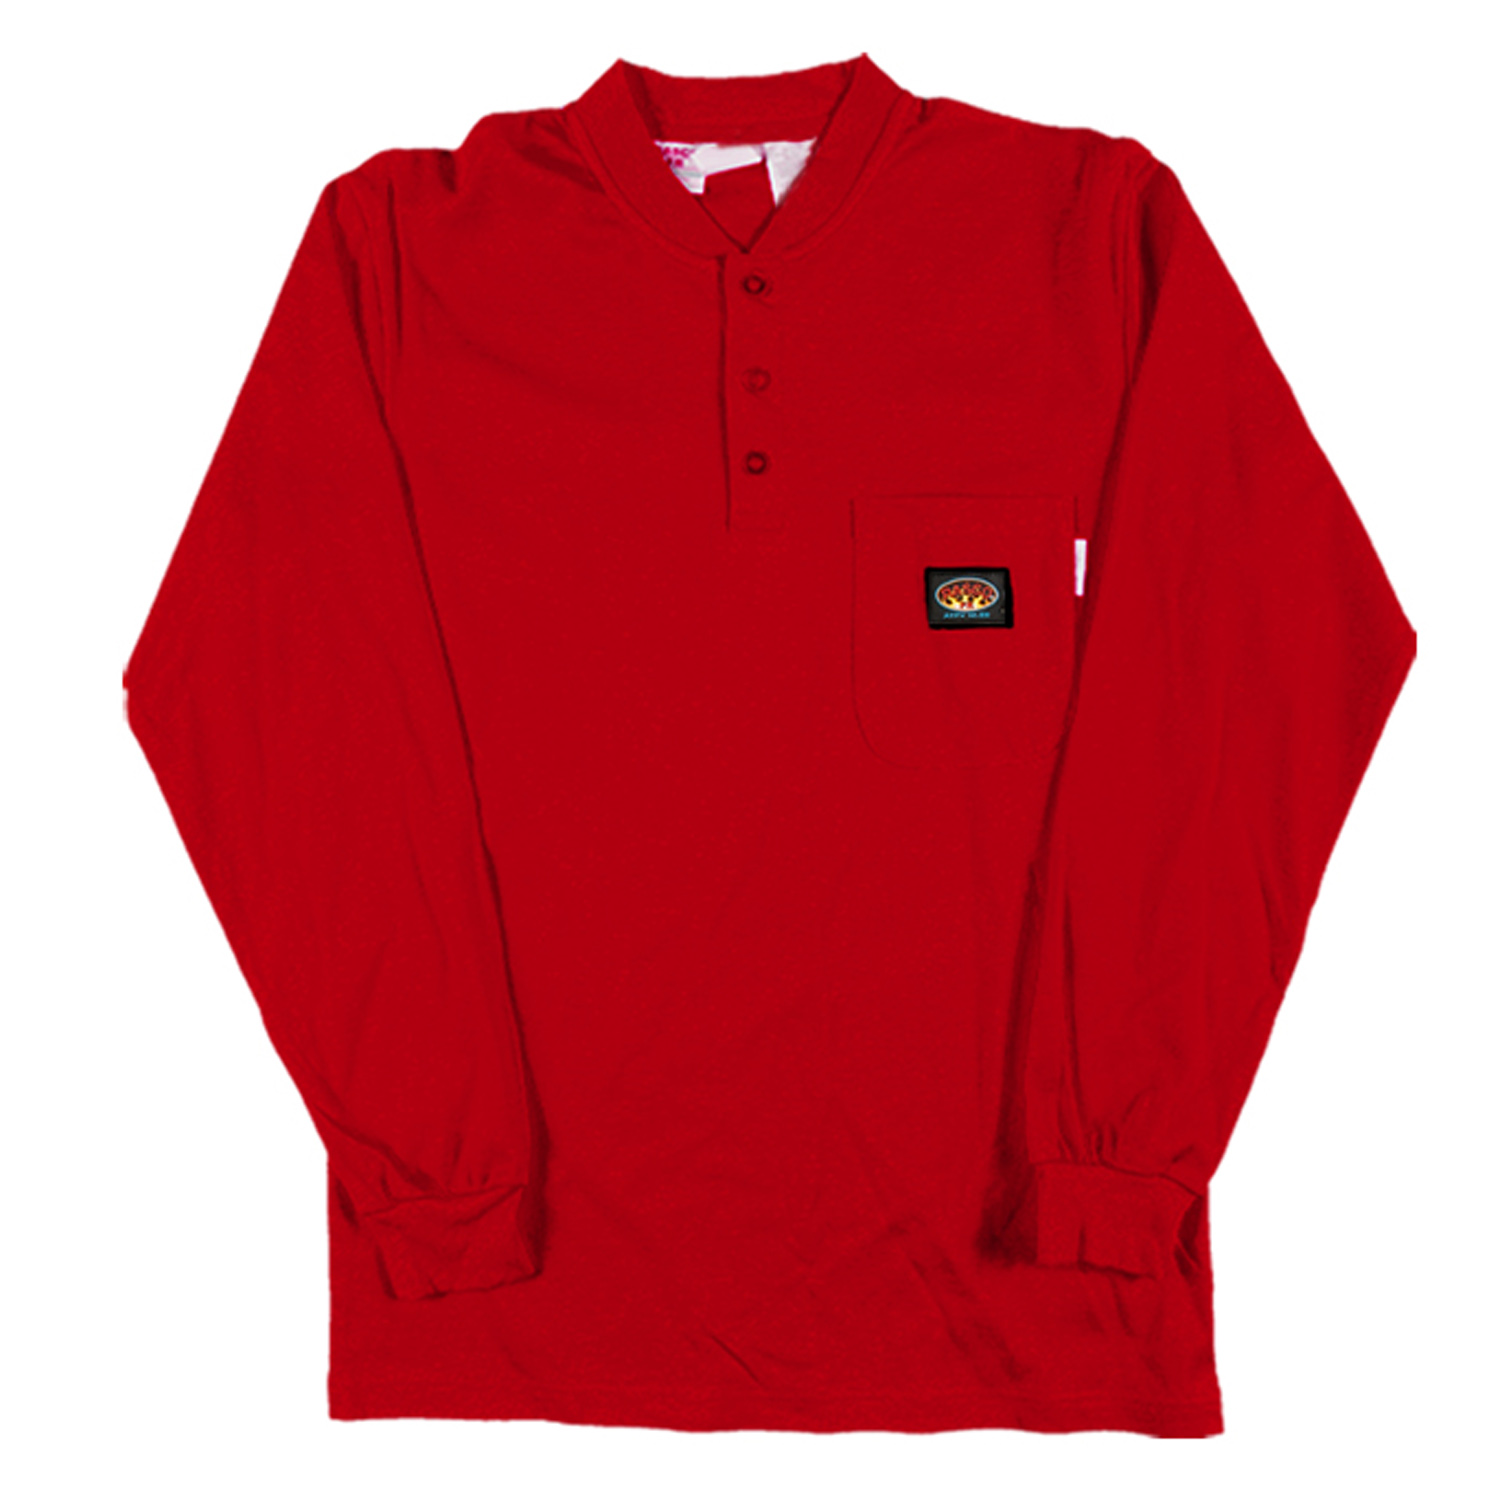 Rasco Fire Retardant Red Henley T-Shirt [Rasco]